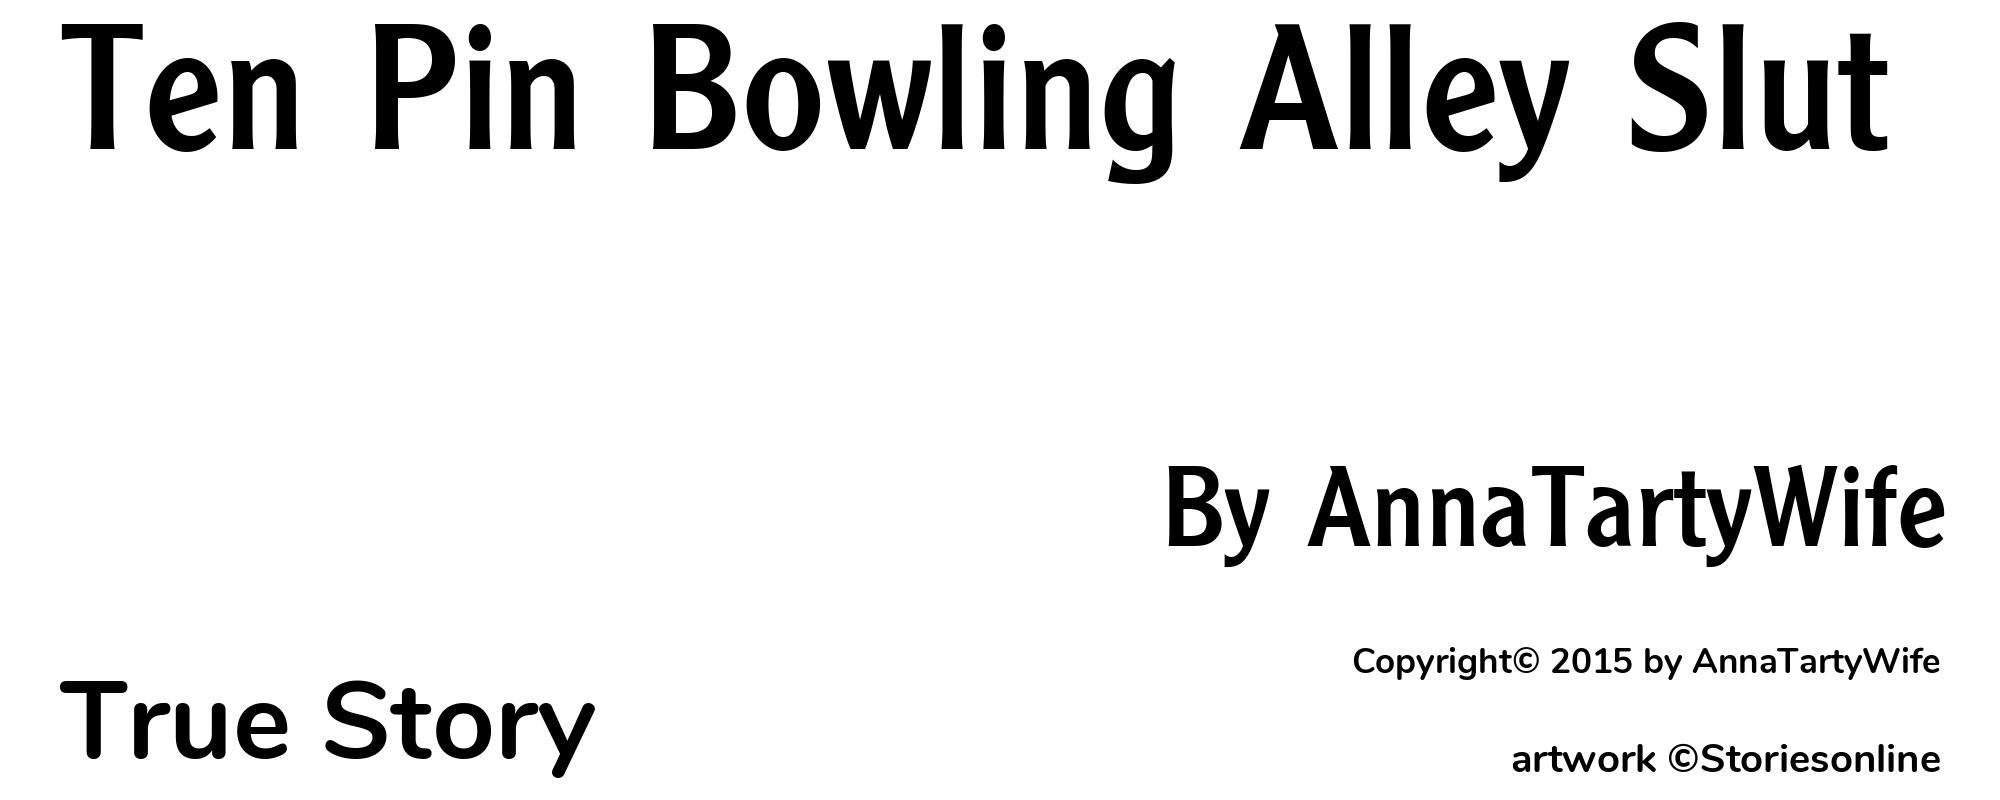 Ten Pin Bowling Alley Slut - Cover